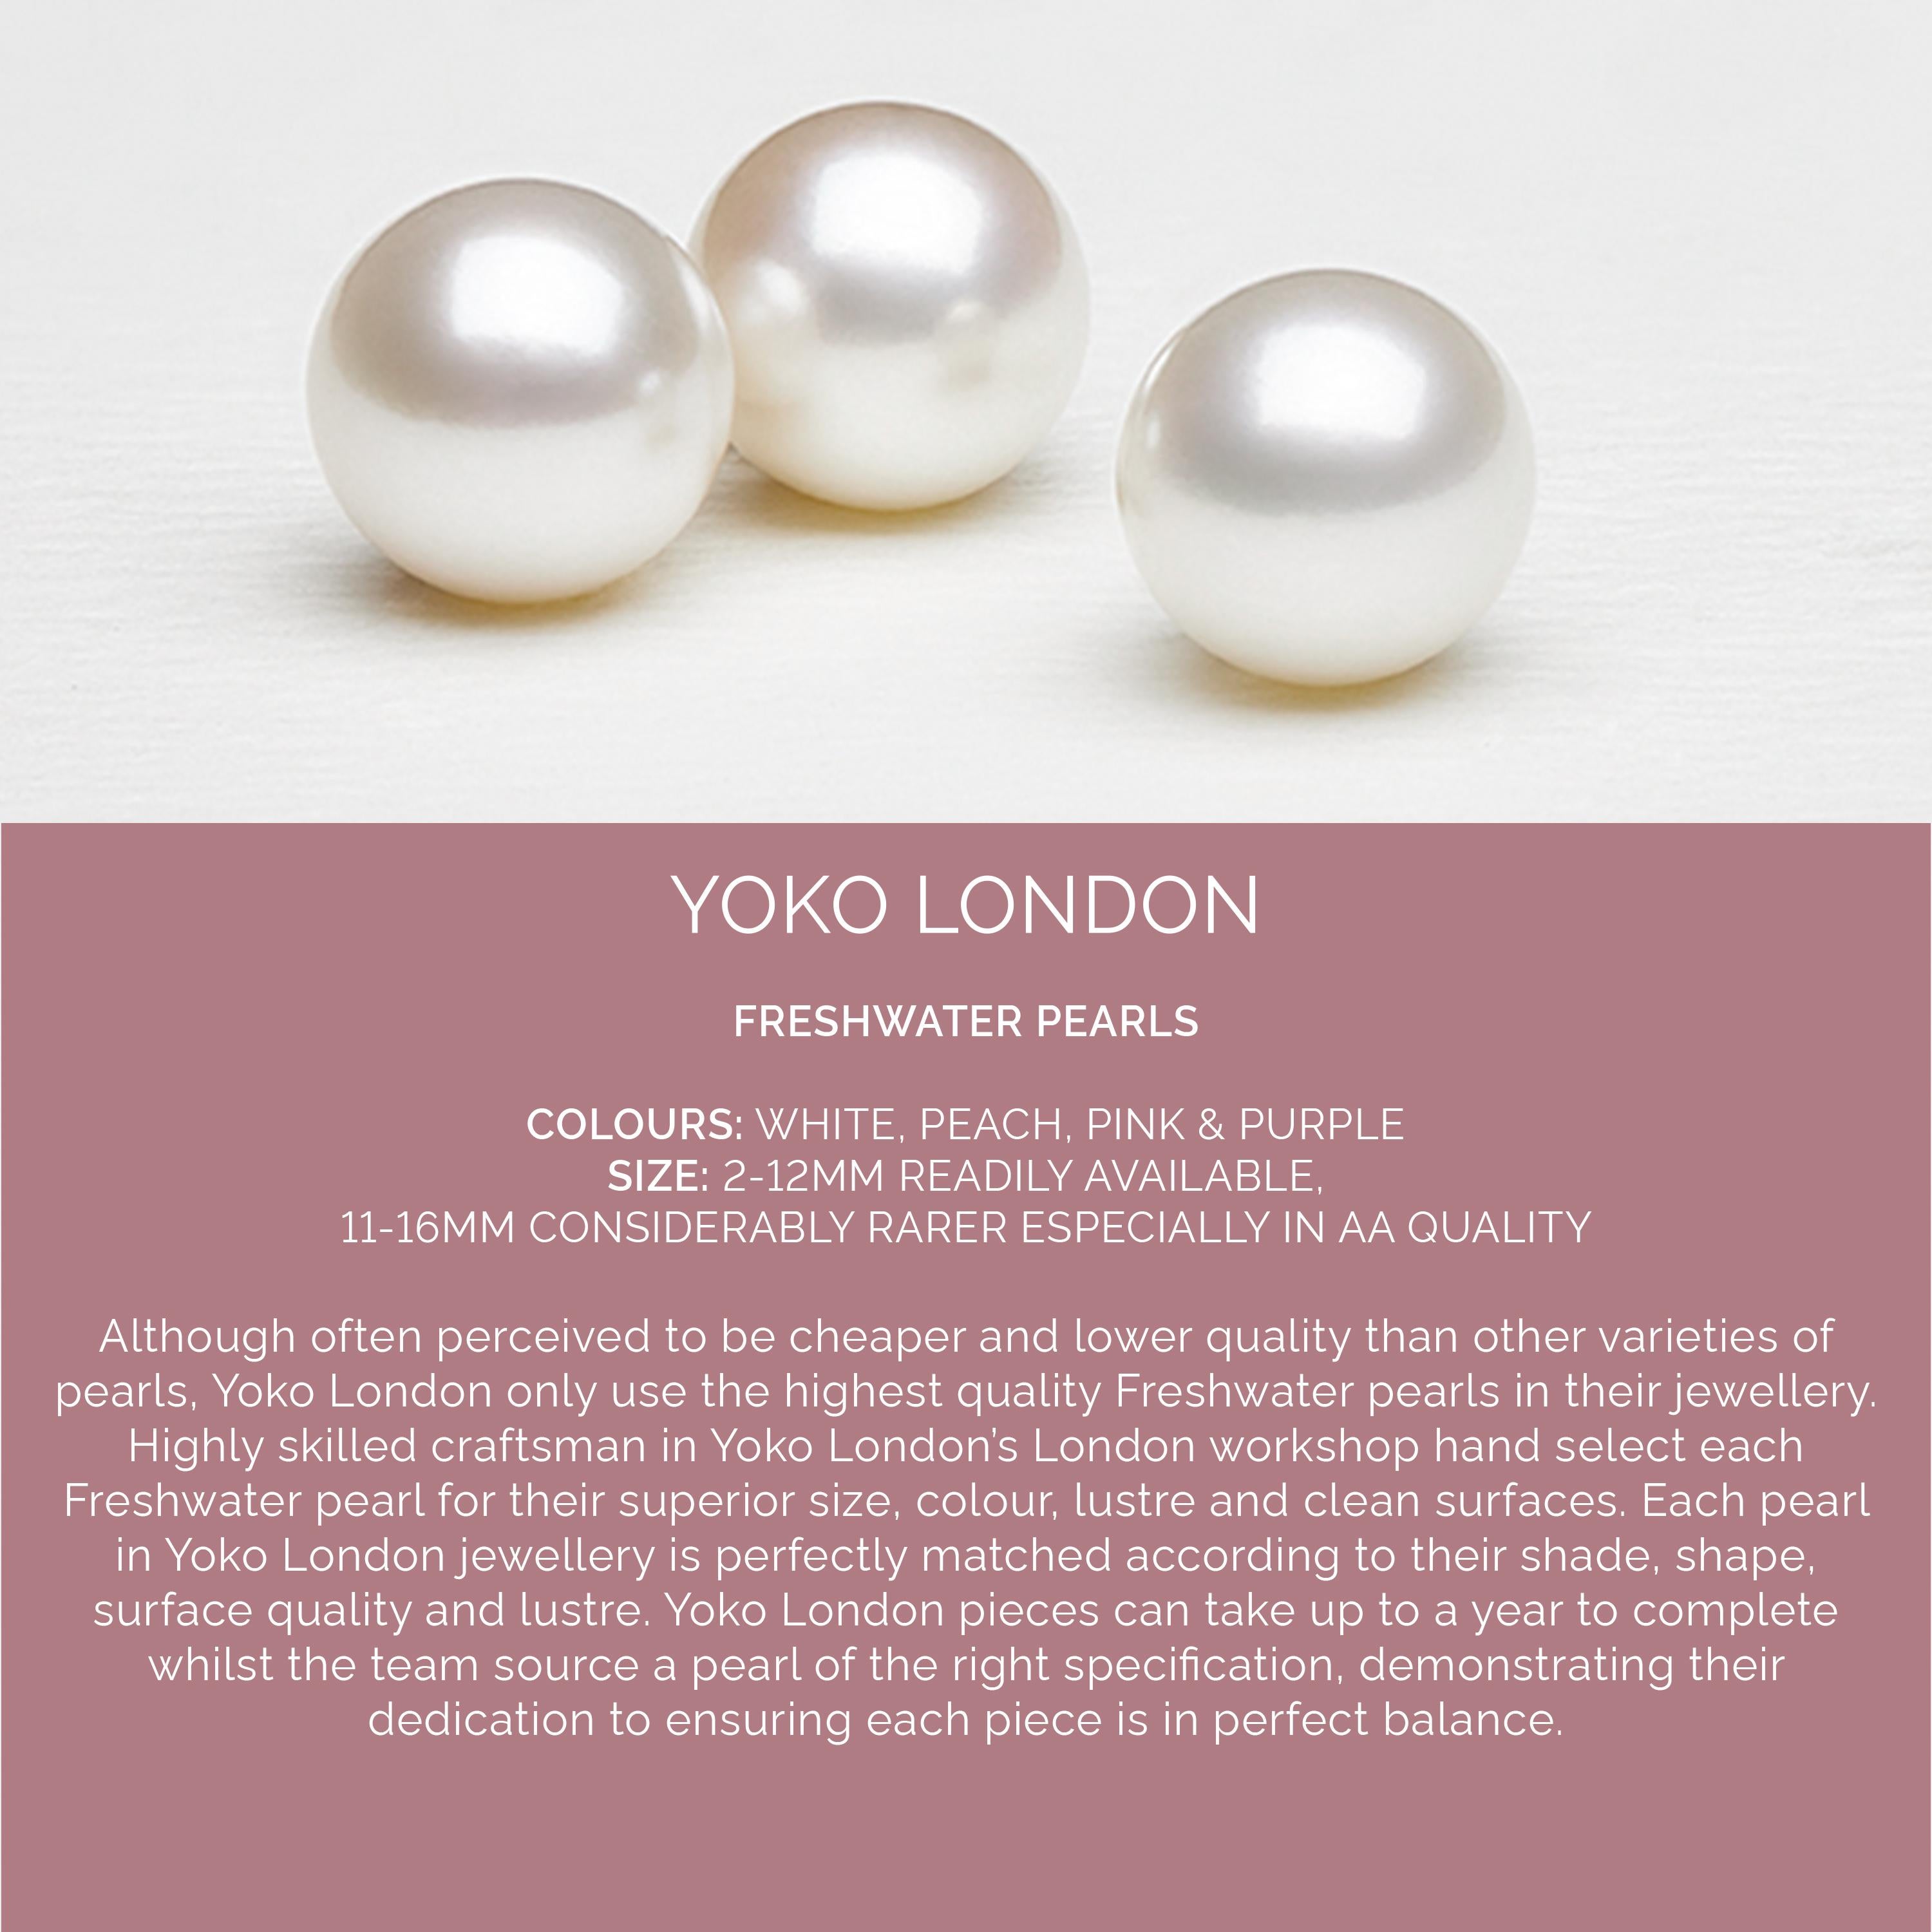 Brilliant Cut Yoko London Freshwater Pearl and Diamond Earrings in 18K White Gold